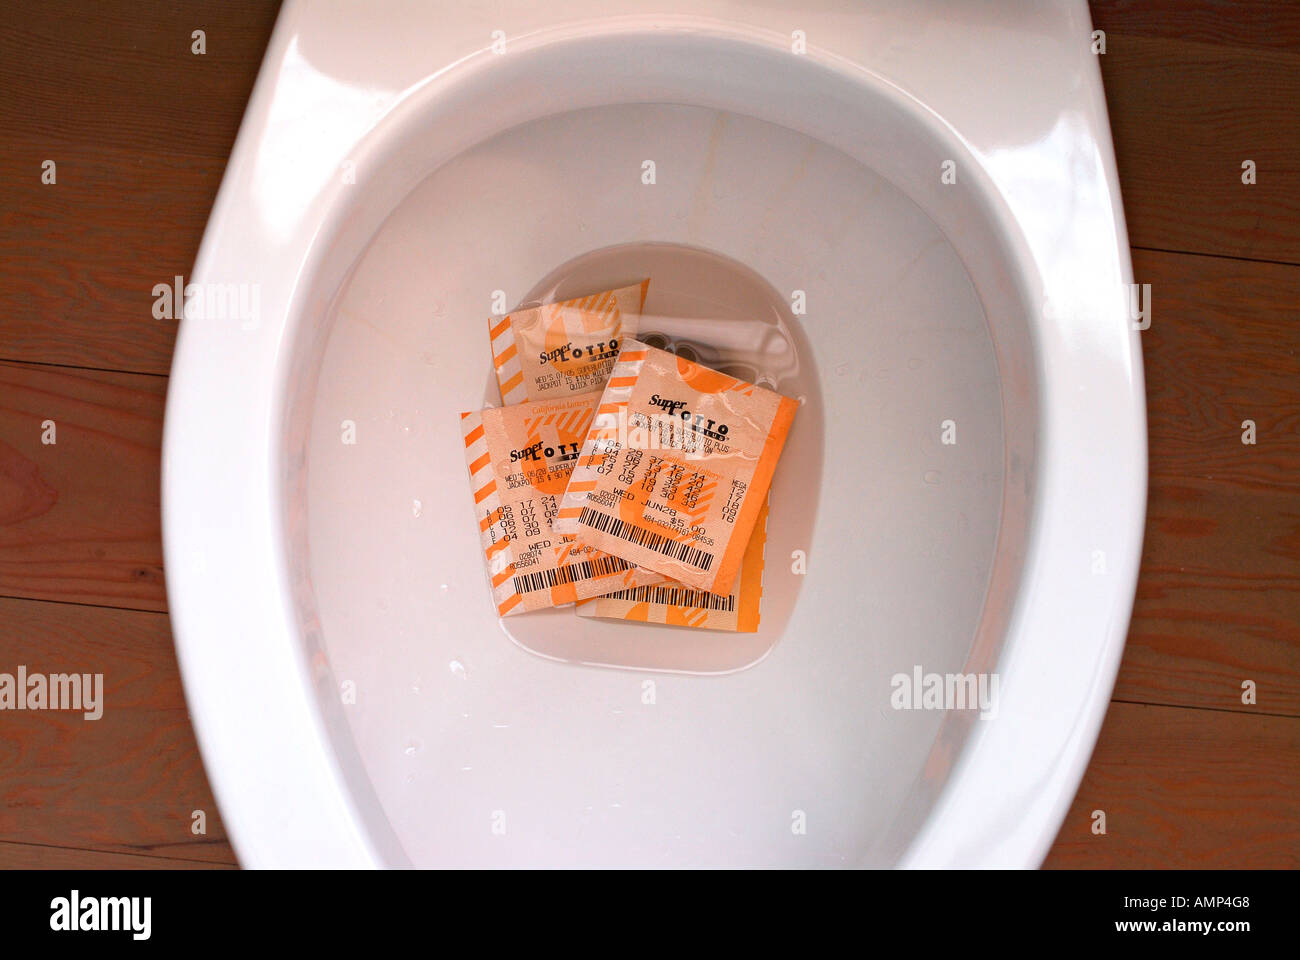 "California ^ Superlotto ^ Lotterie ^ Ticket in die Toilette" Stockfoto